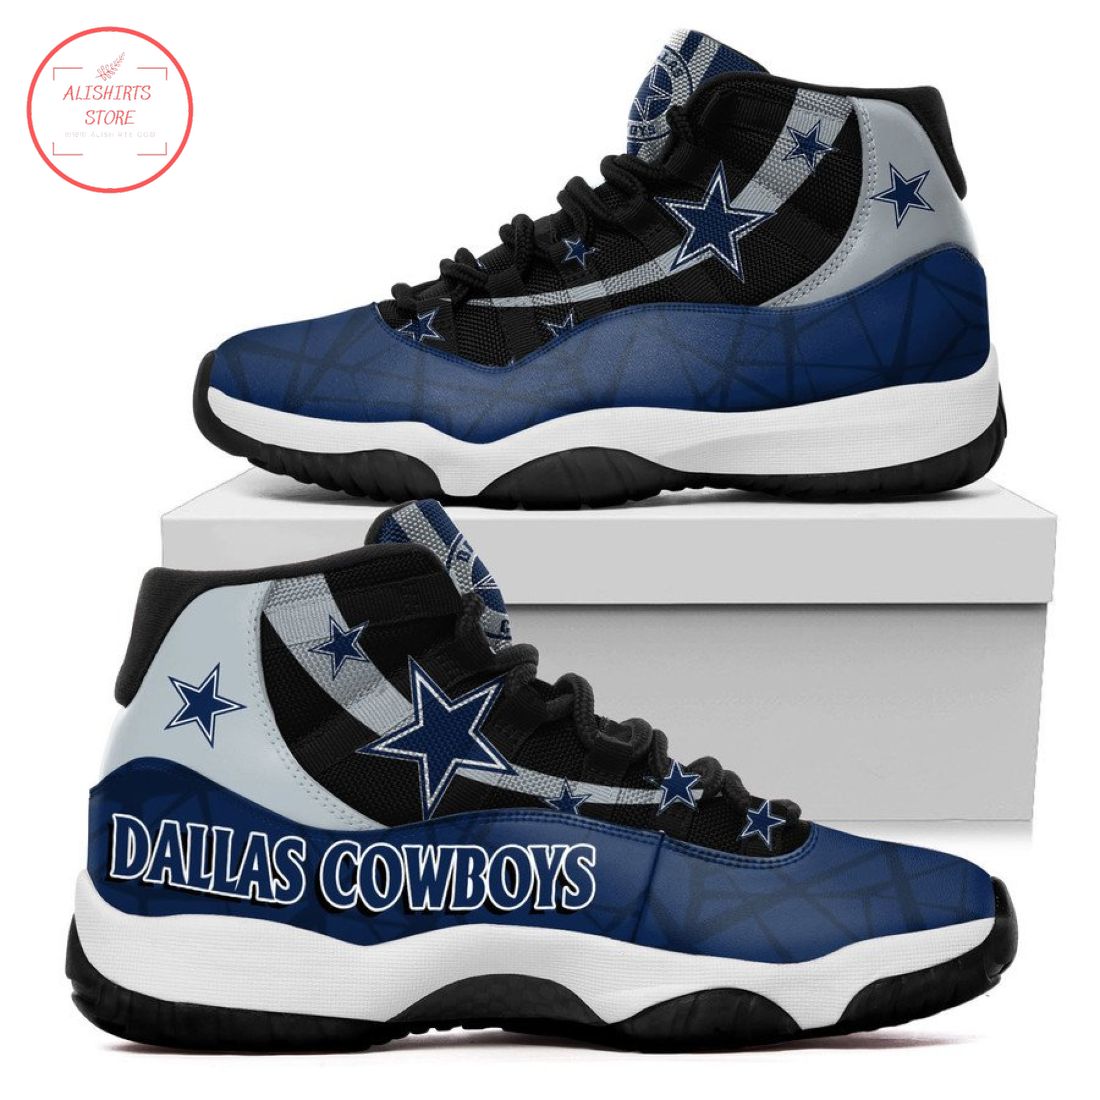 NFL Dallas Cowboys New Air Jordan 11 Sneakers Shoes